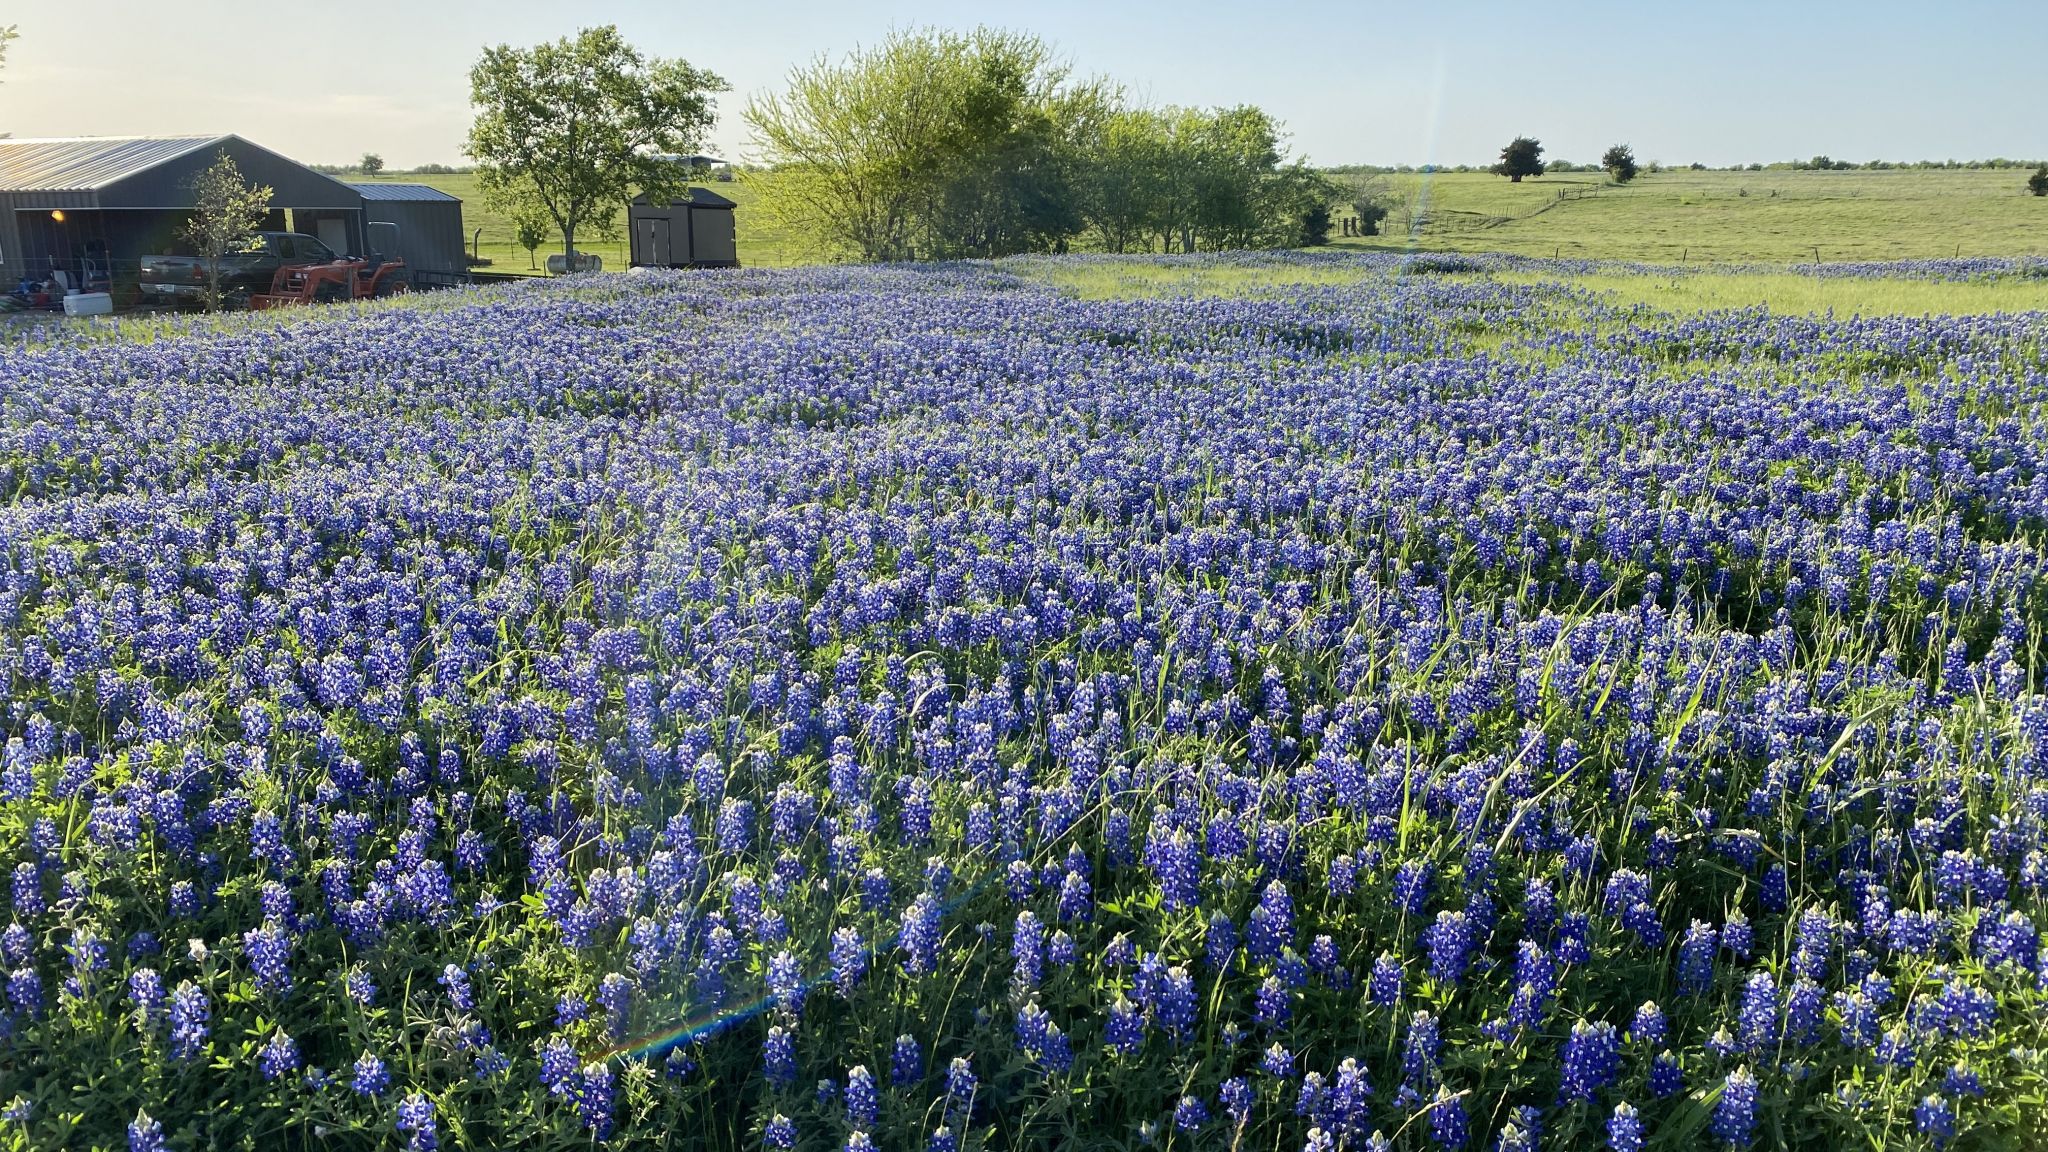 Texas Most Beautiful Bluebonnets Can Be Found Along The Ennis Bluebonnet Trails